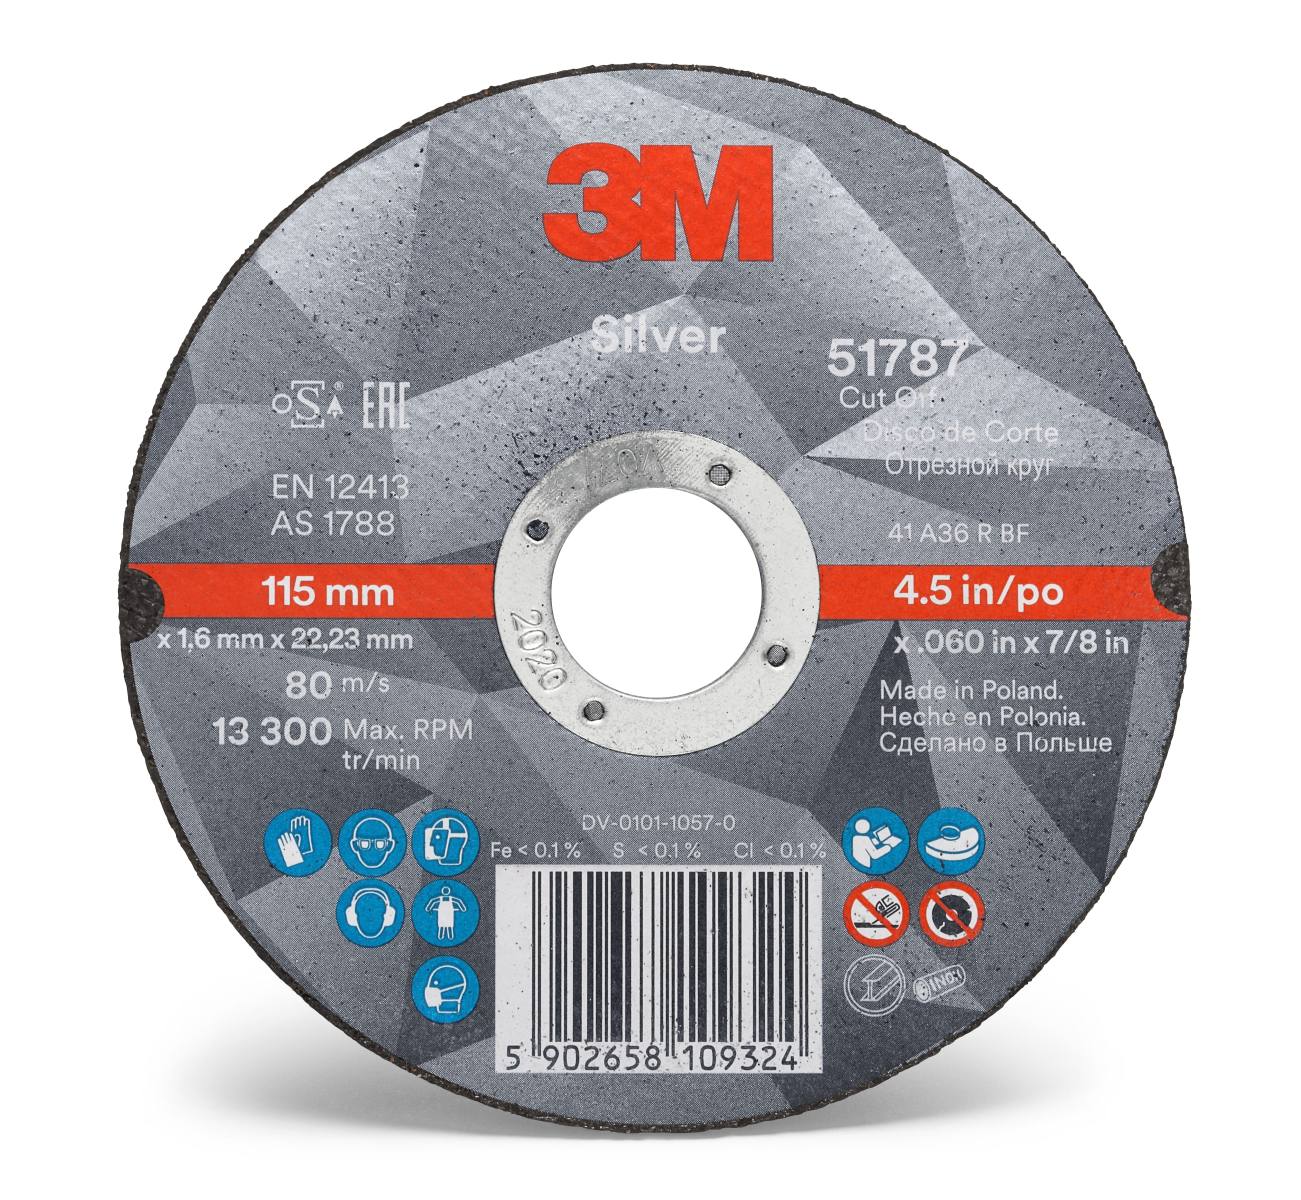 3M Silver Cut-Off Wheel Trennscheibe, 105 mm, 1,0 mm, 10 mm, T41, 51777